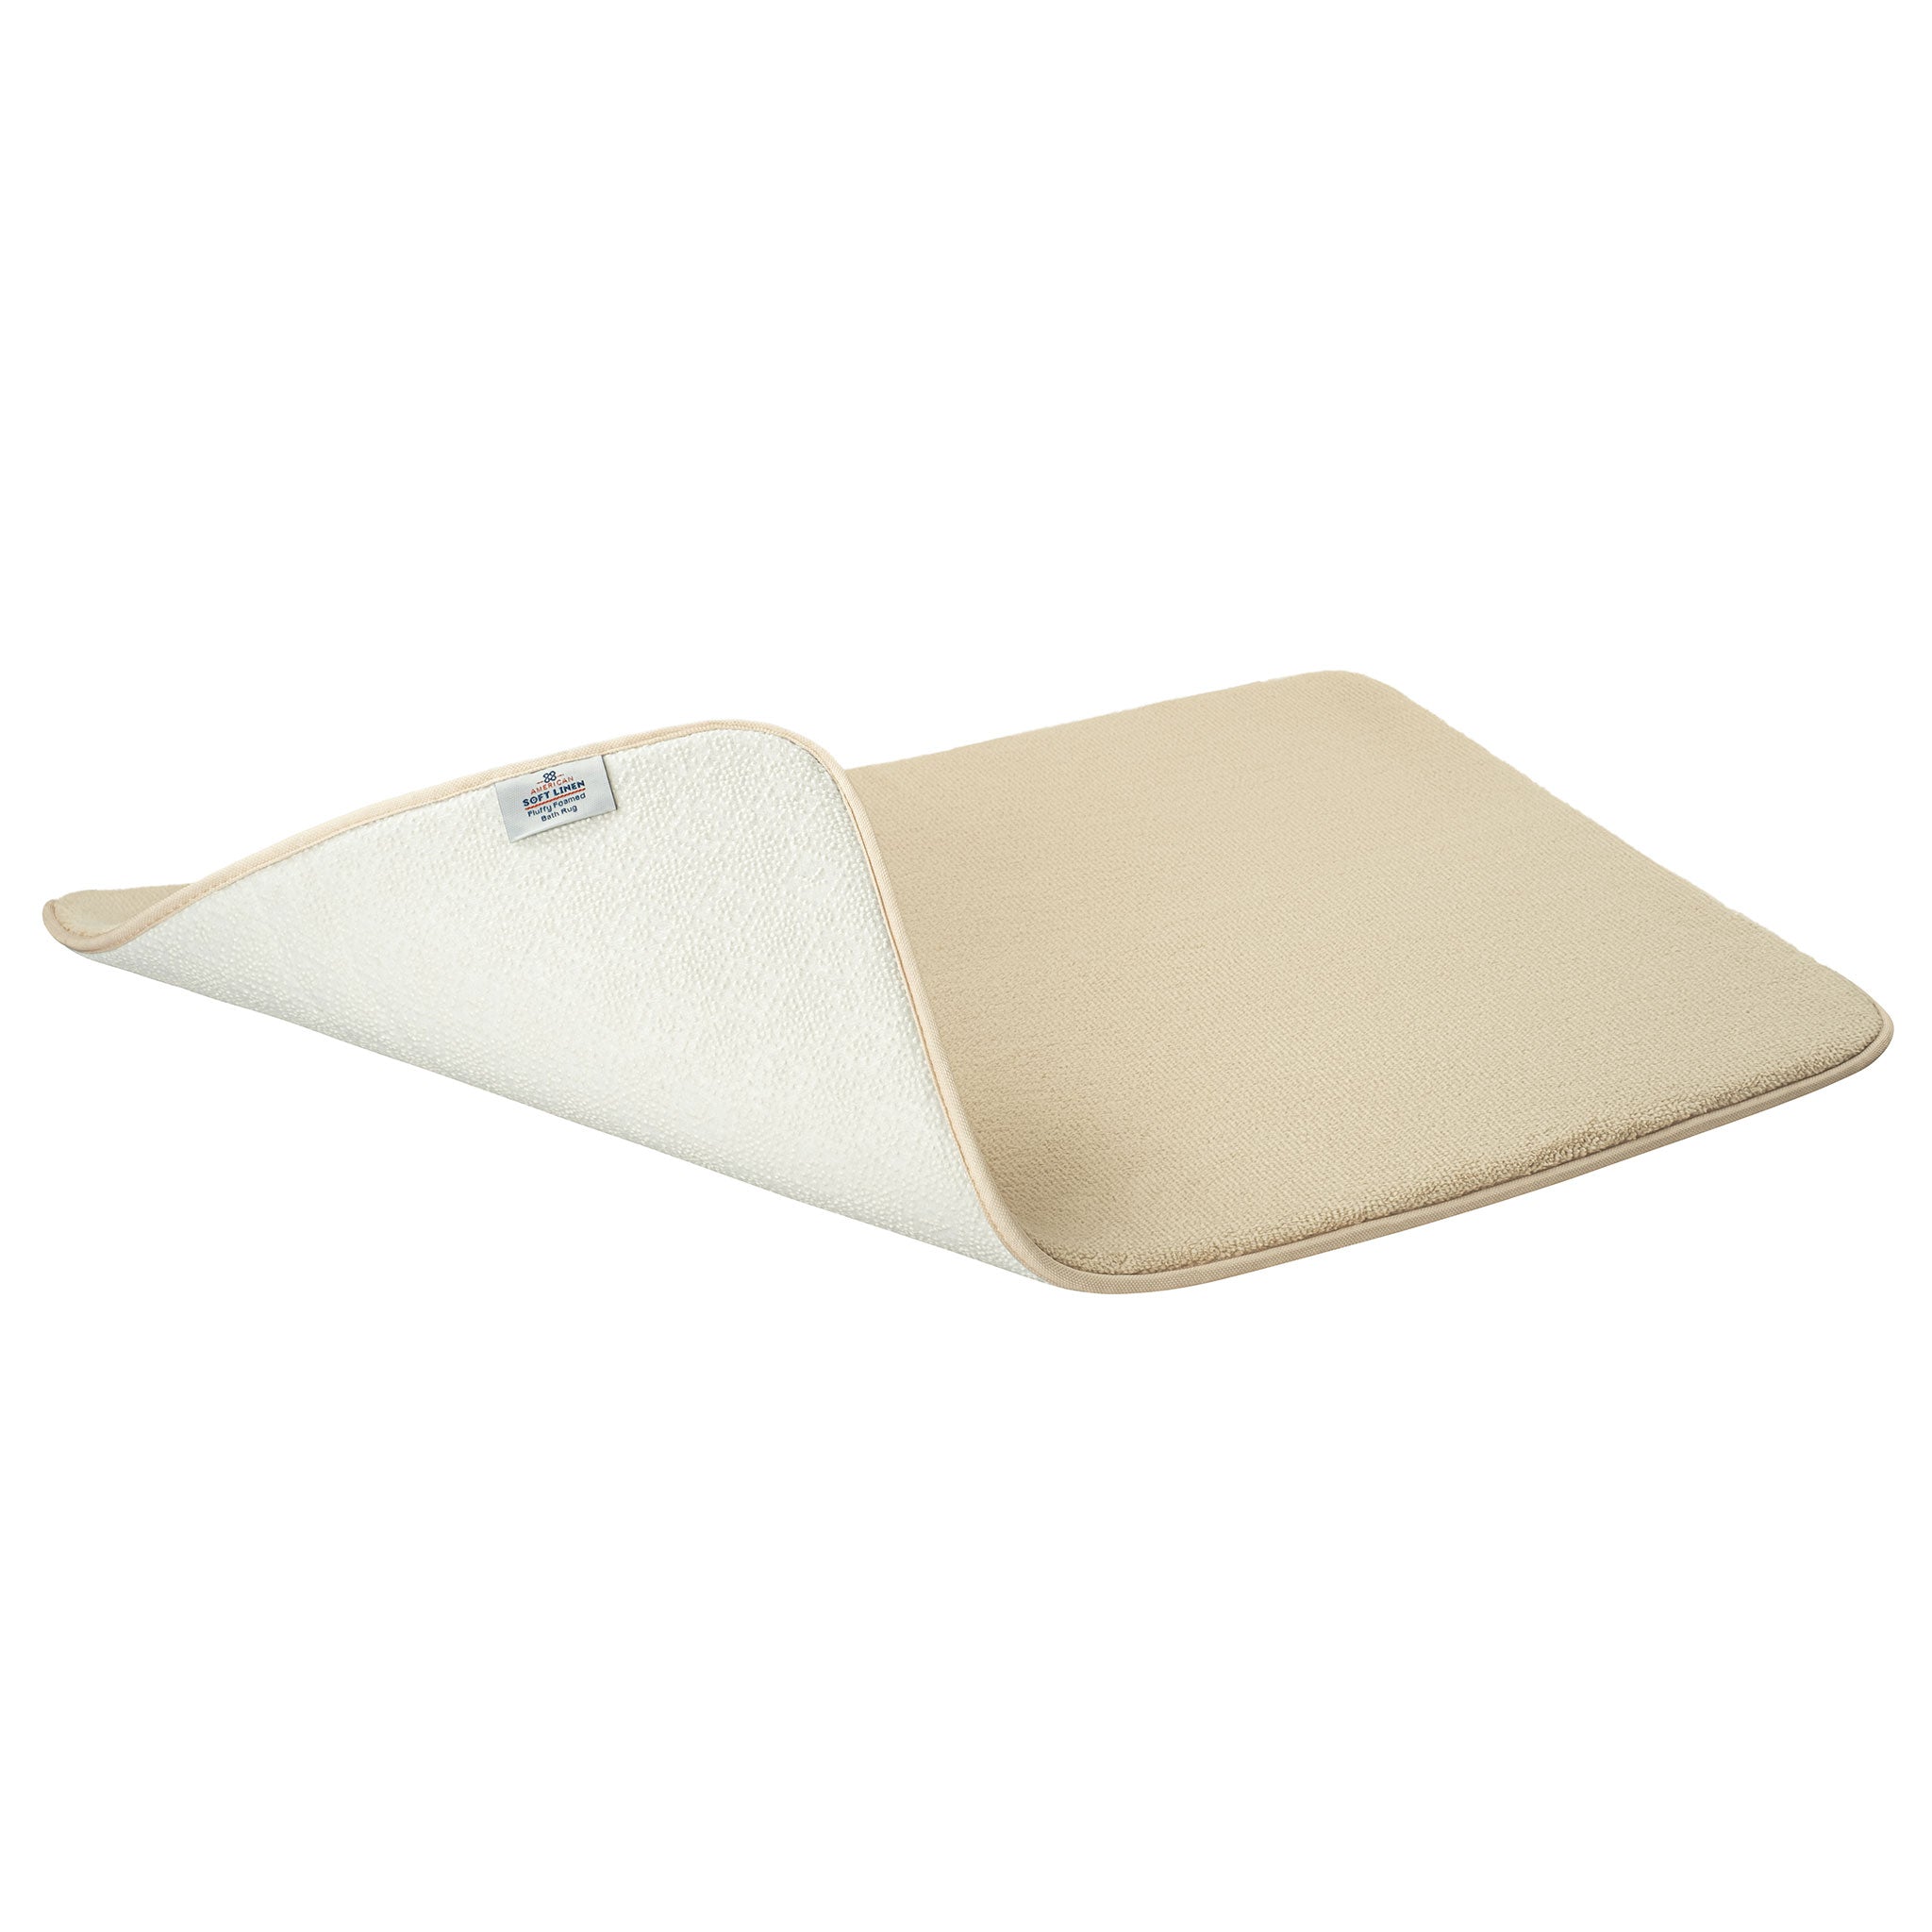 American Soft Linen - Fluffy Foamed Non-Slip Bath Rug-21x32 Inch - Sand-Taupe - 5